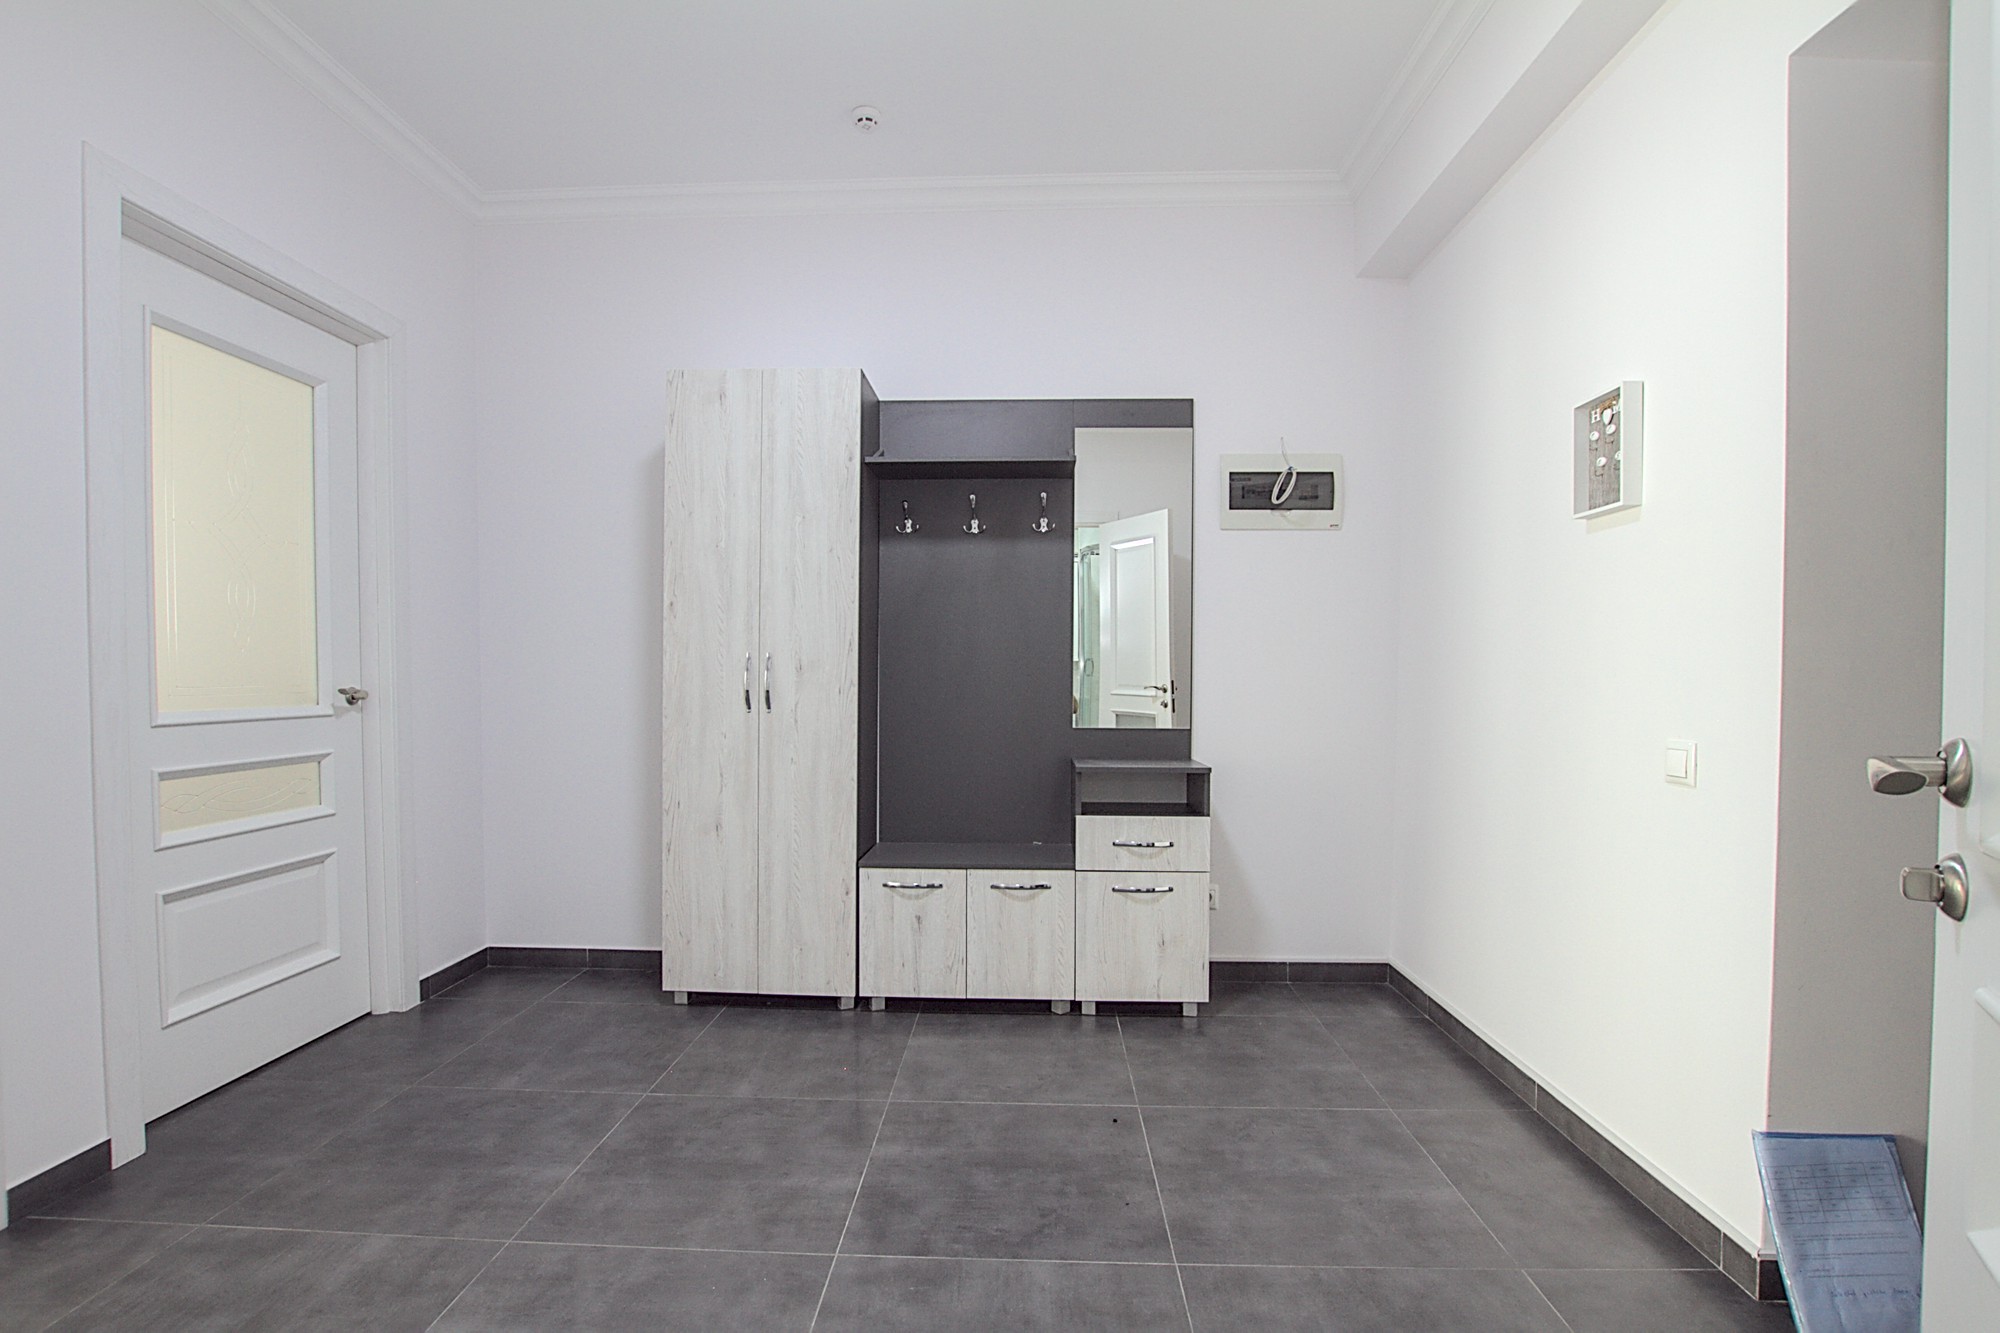 Melestiu Studio is a 1 room apartment for rent in Chisinau, Moldova